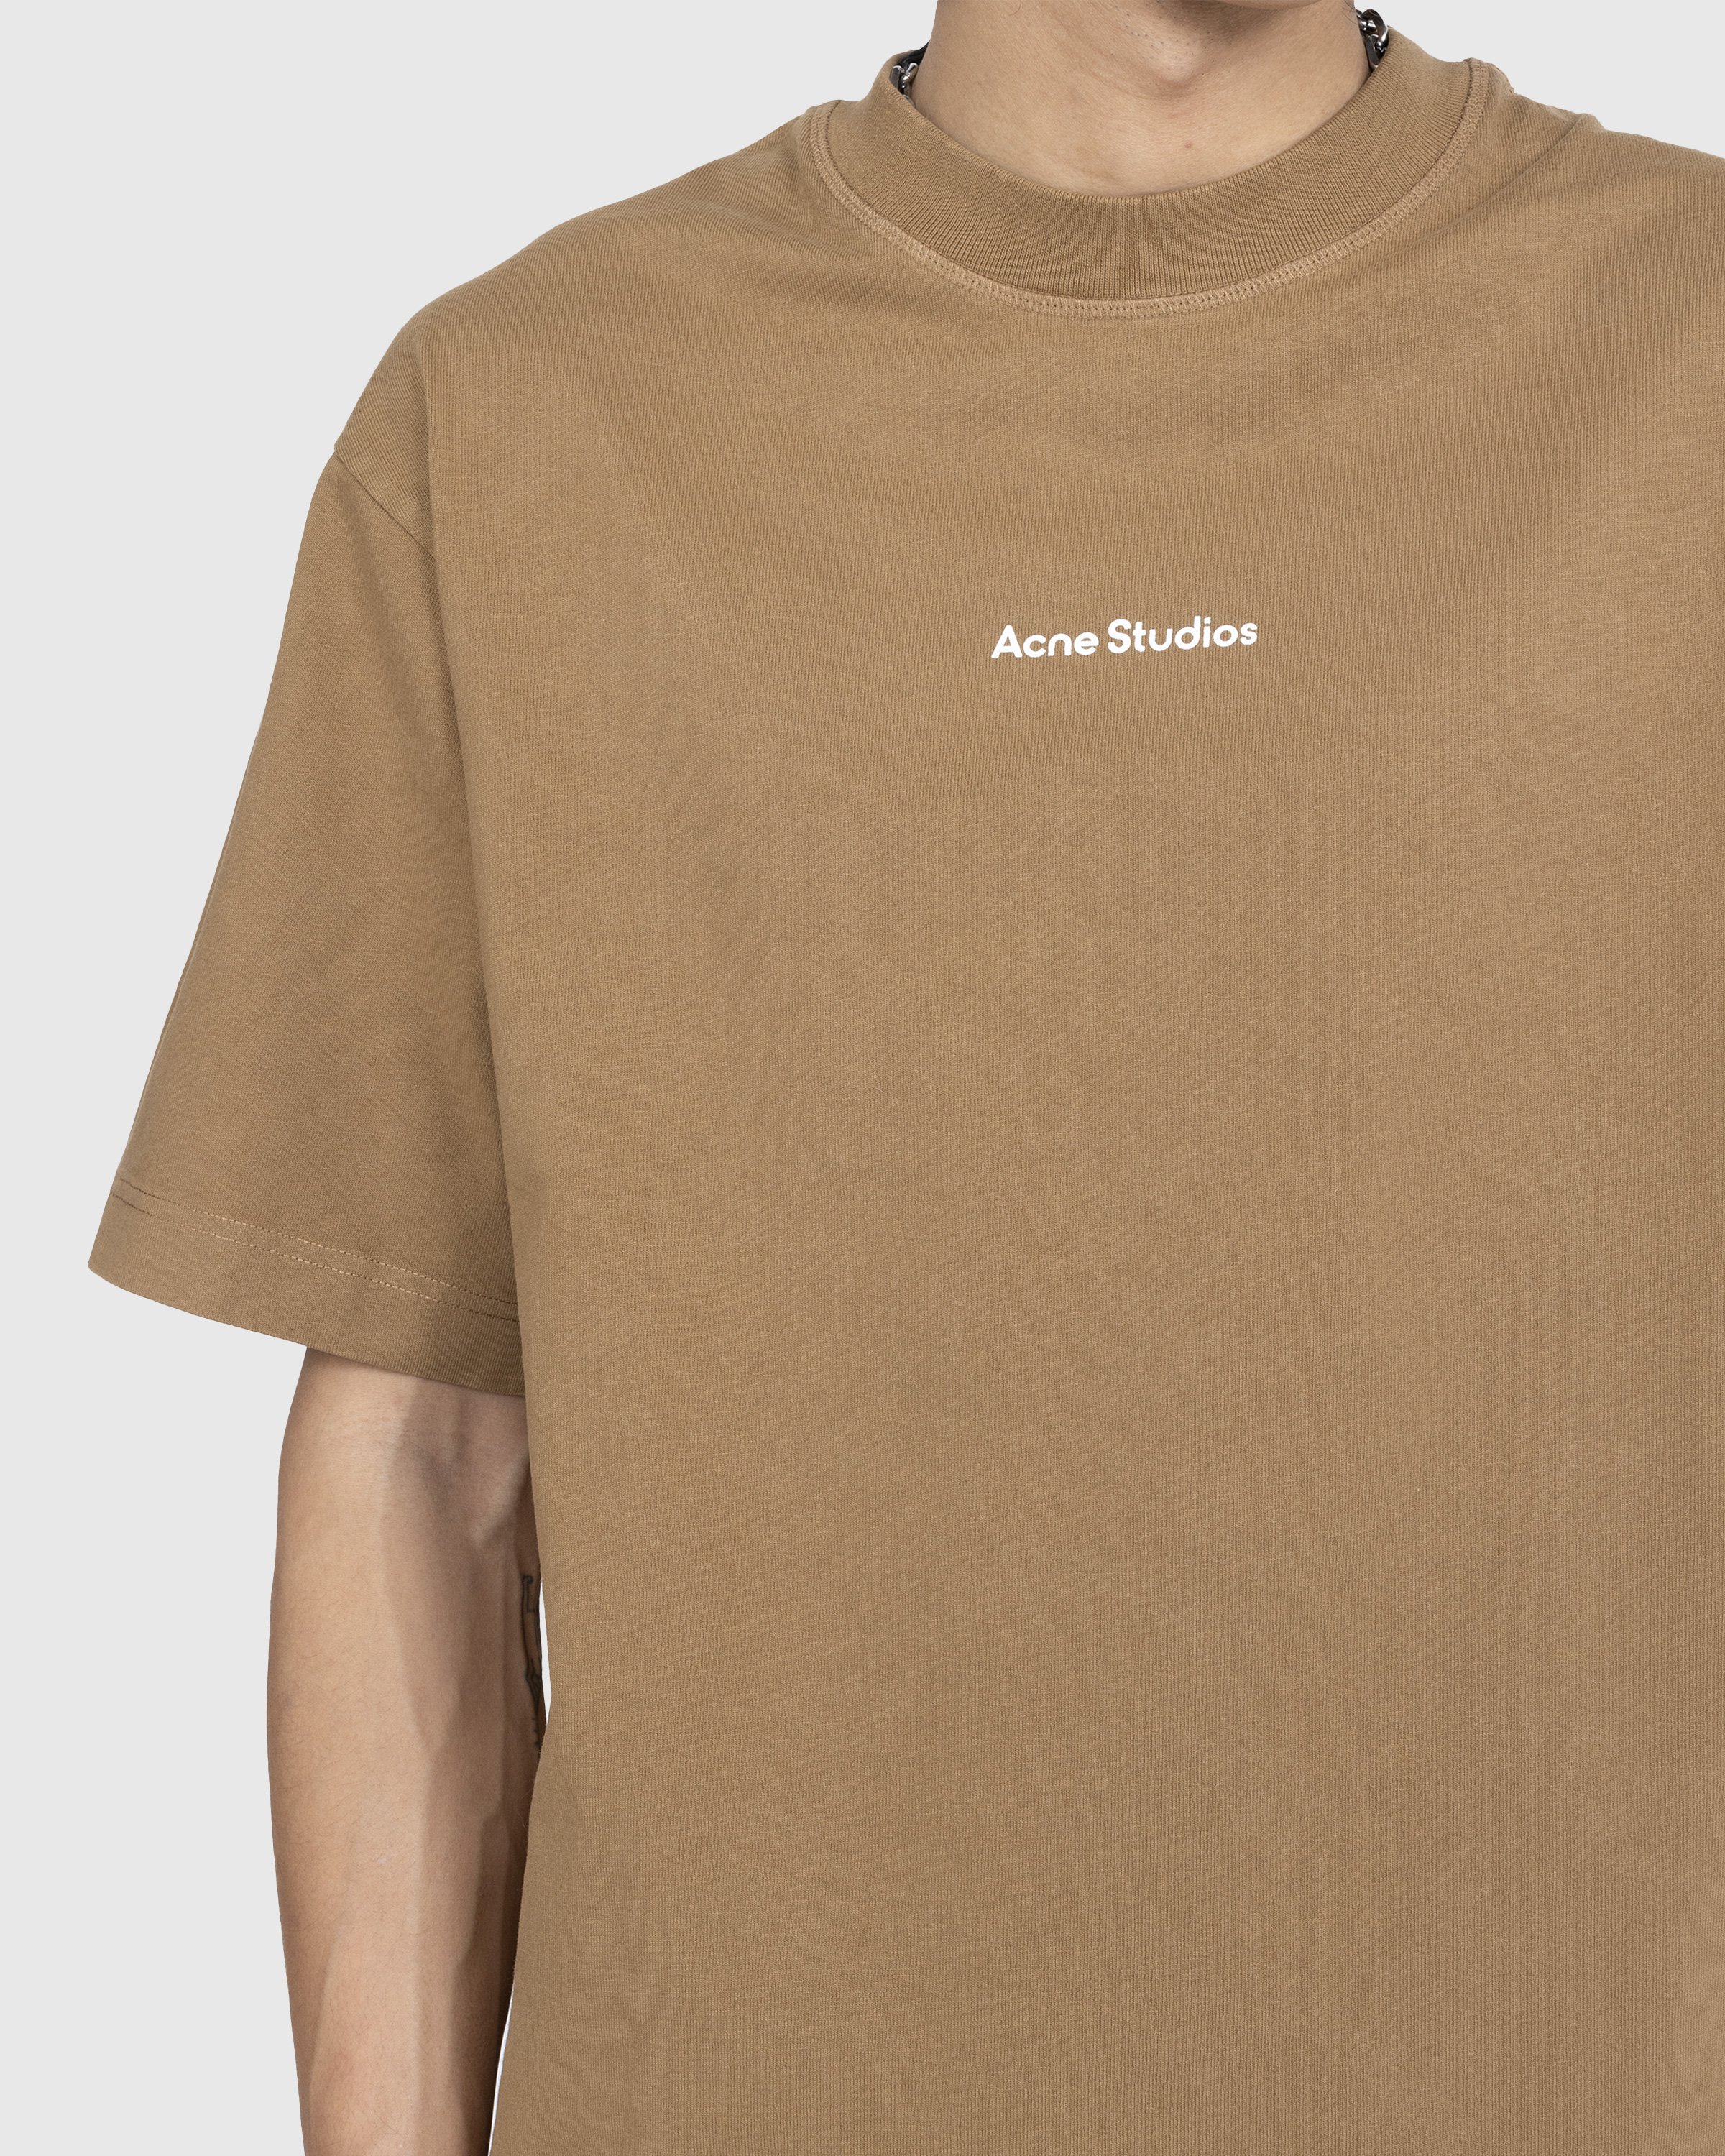 Acne Studios - Logo T-Shirt Mud Beige - Clothing - Beige - Image 4